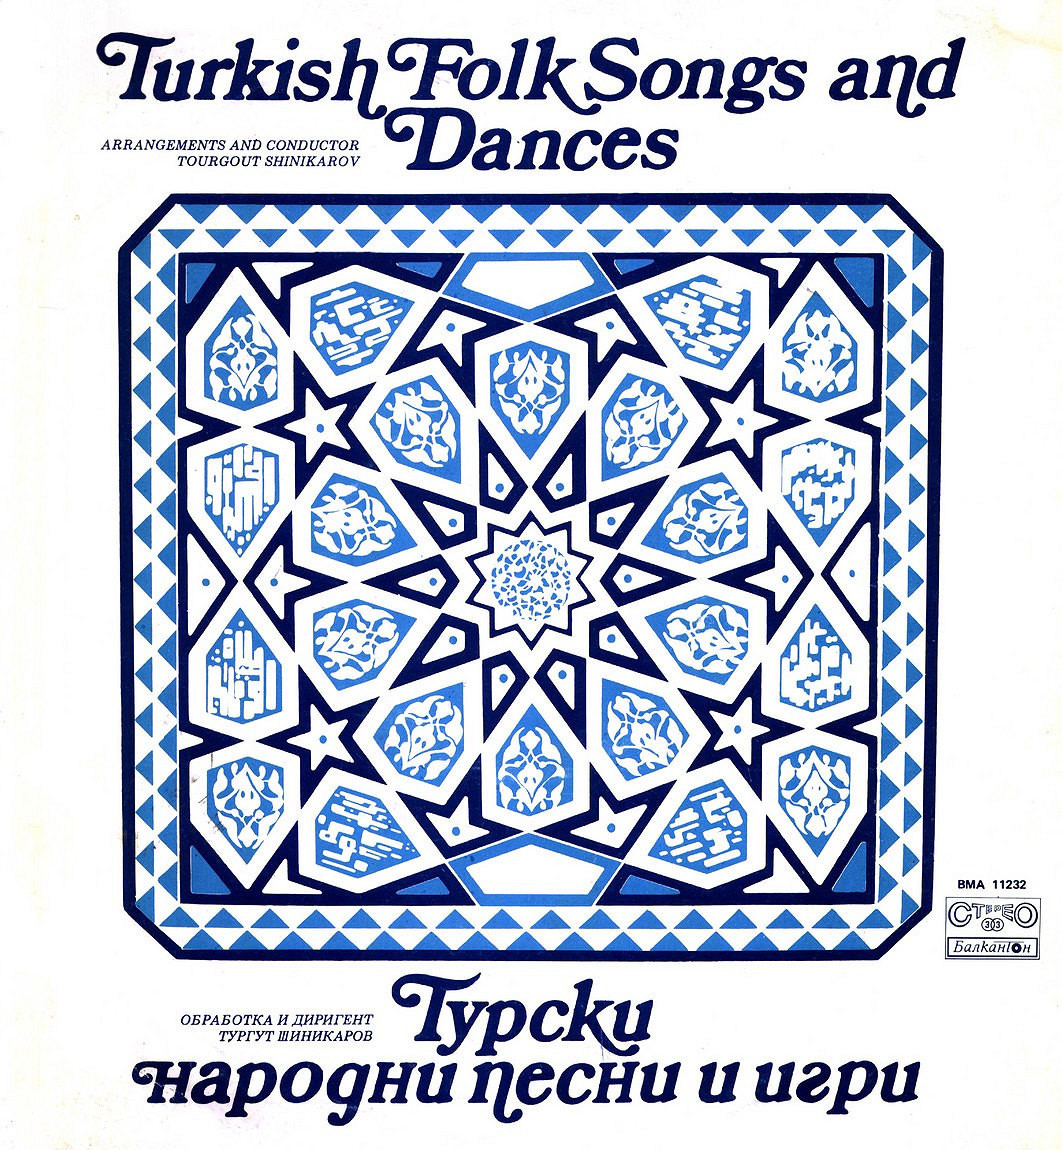 Турски народни песни и игри